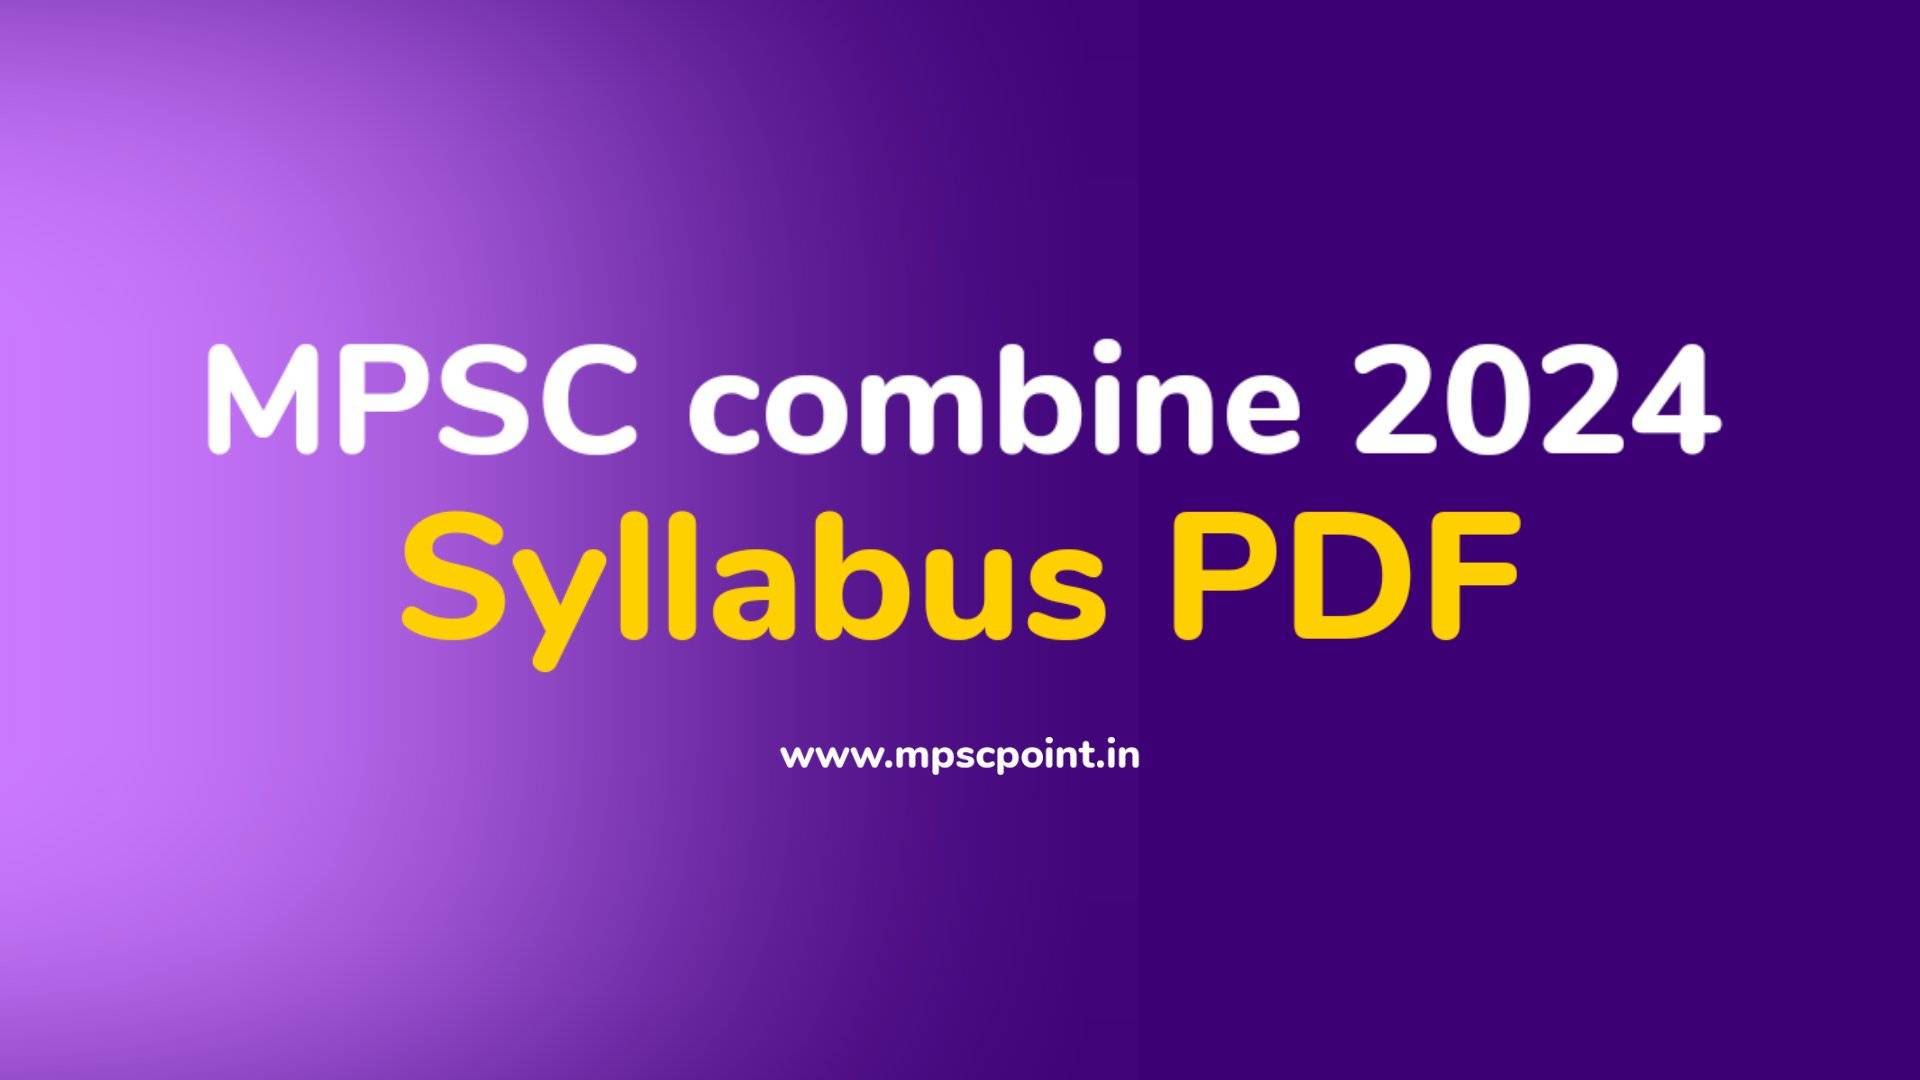 MPSC combine syllabus 2024